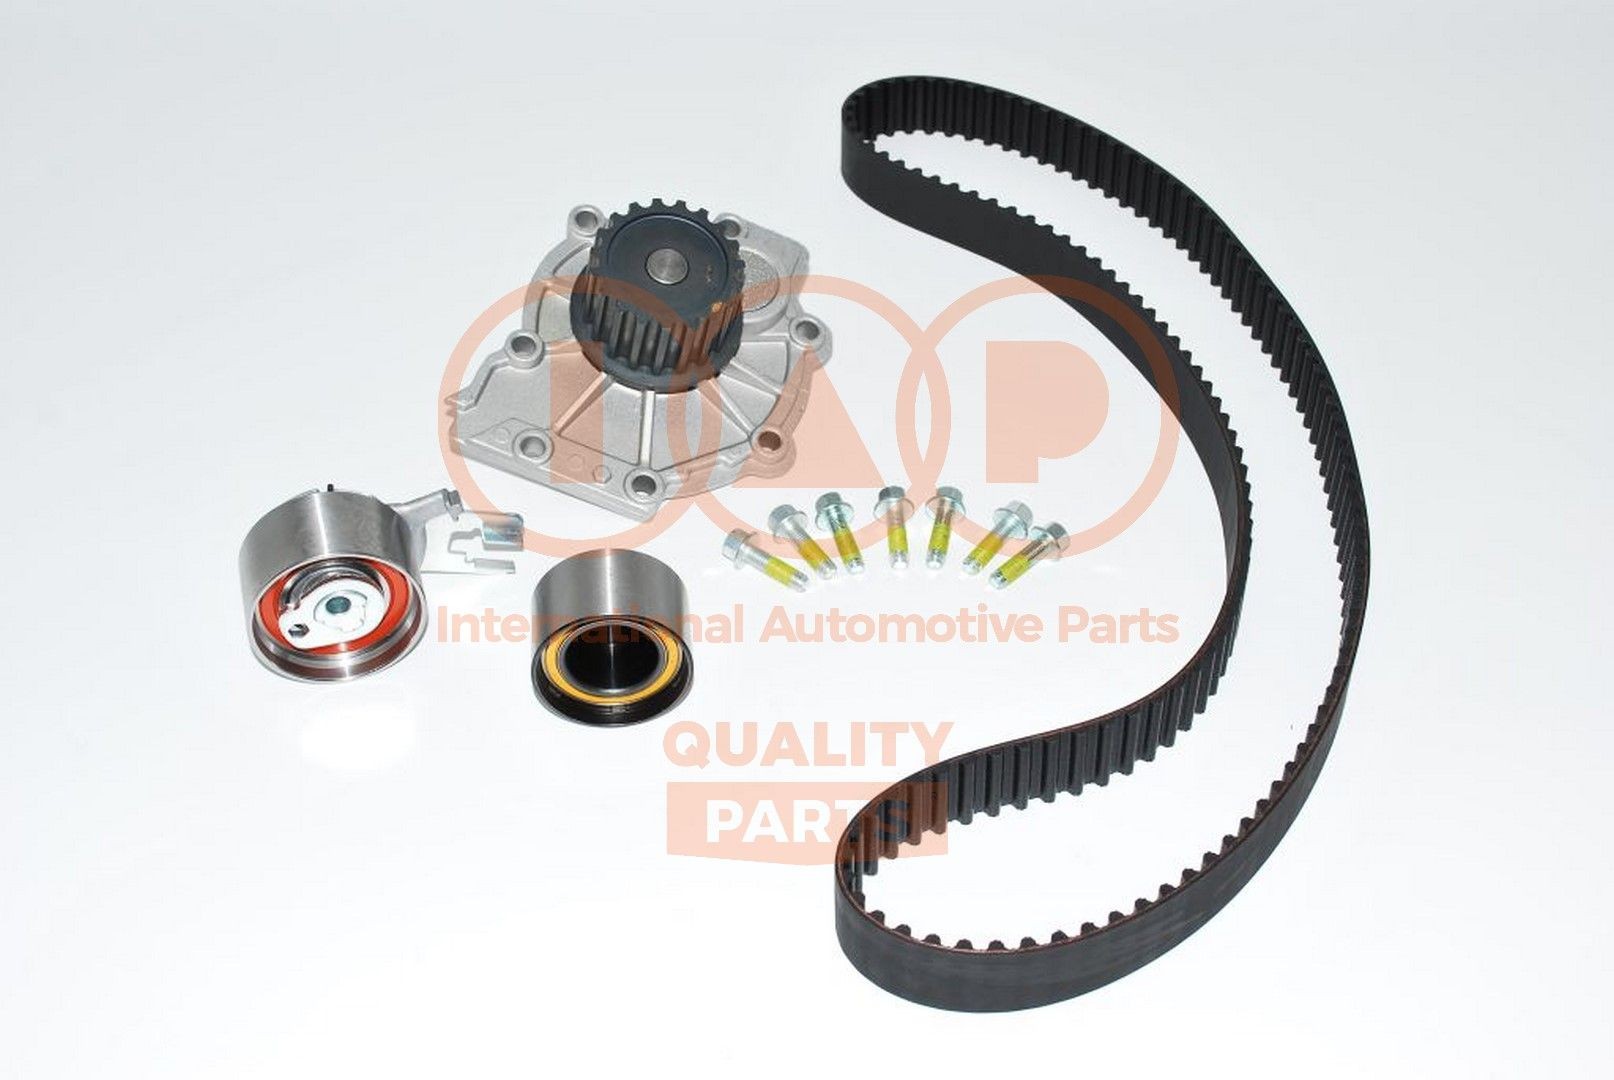 IAP QUALITY PARTS 15056021K Timing belt kit with water pump Volvo C30 533 2.4 D5 180 hp Diesel 2010 price